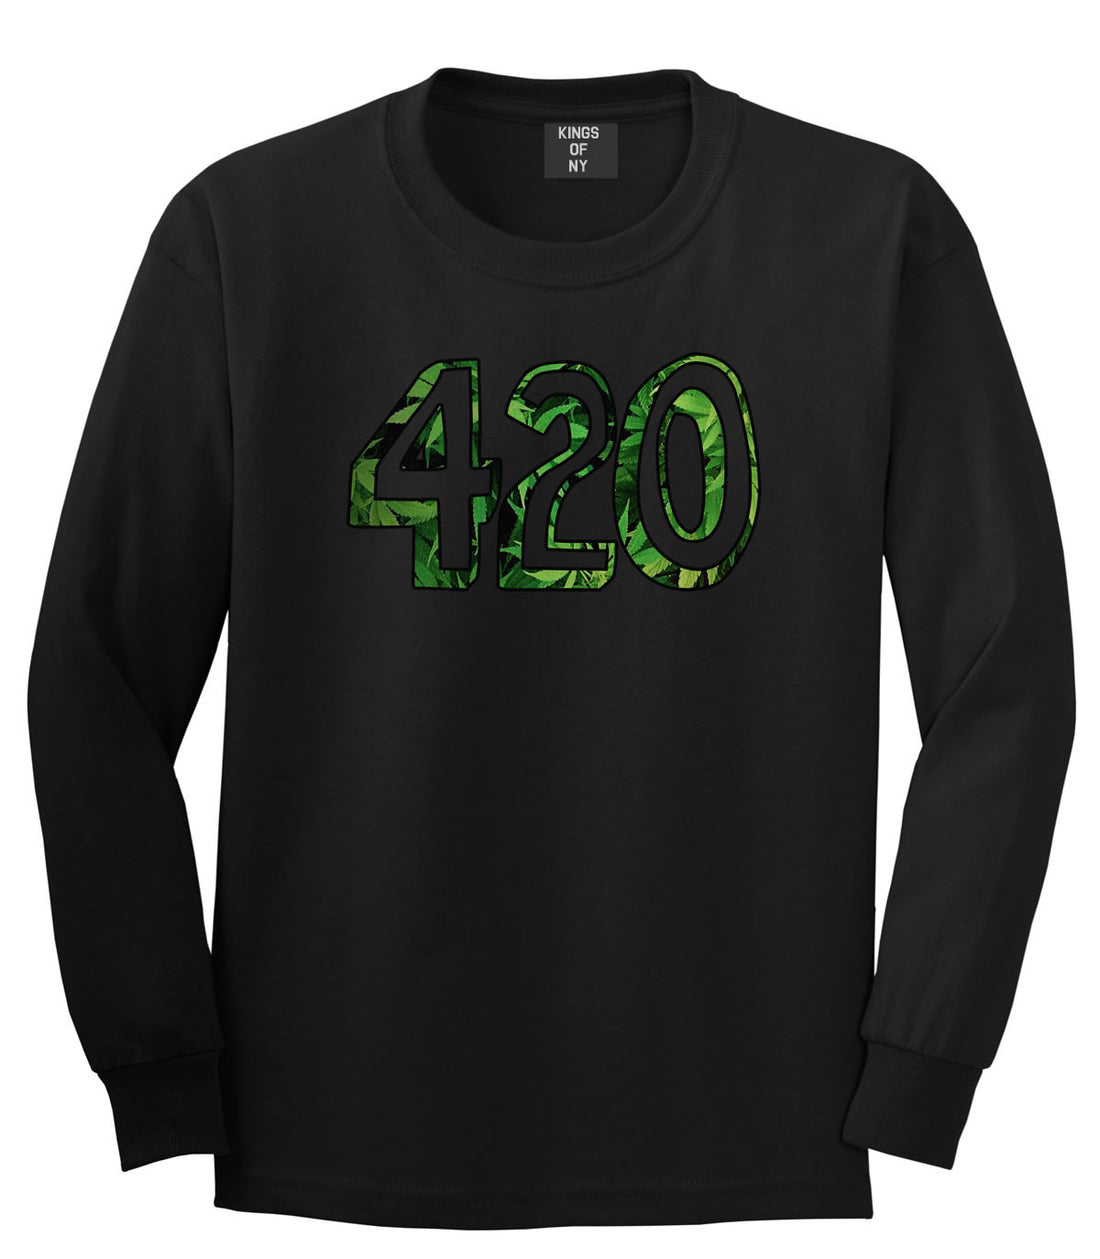  420 Weed Marijuana Print Boys Kids Long Sleeve T-Shirt in Black by Kings Of NY